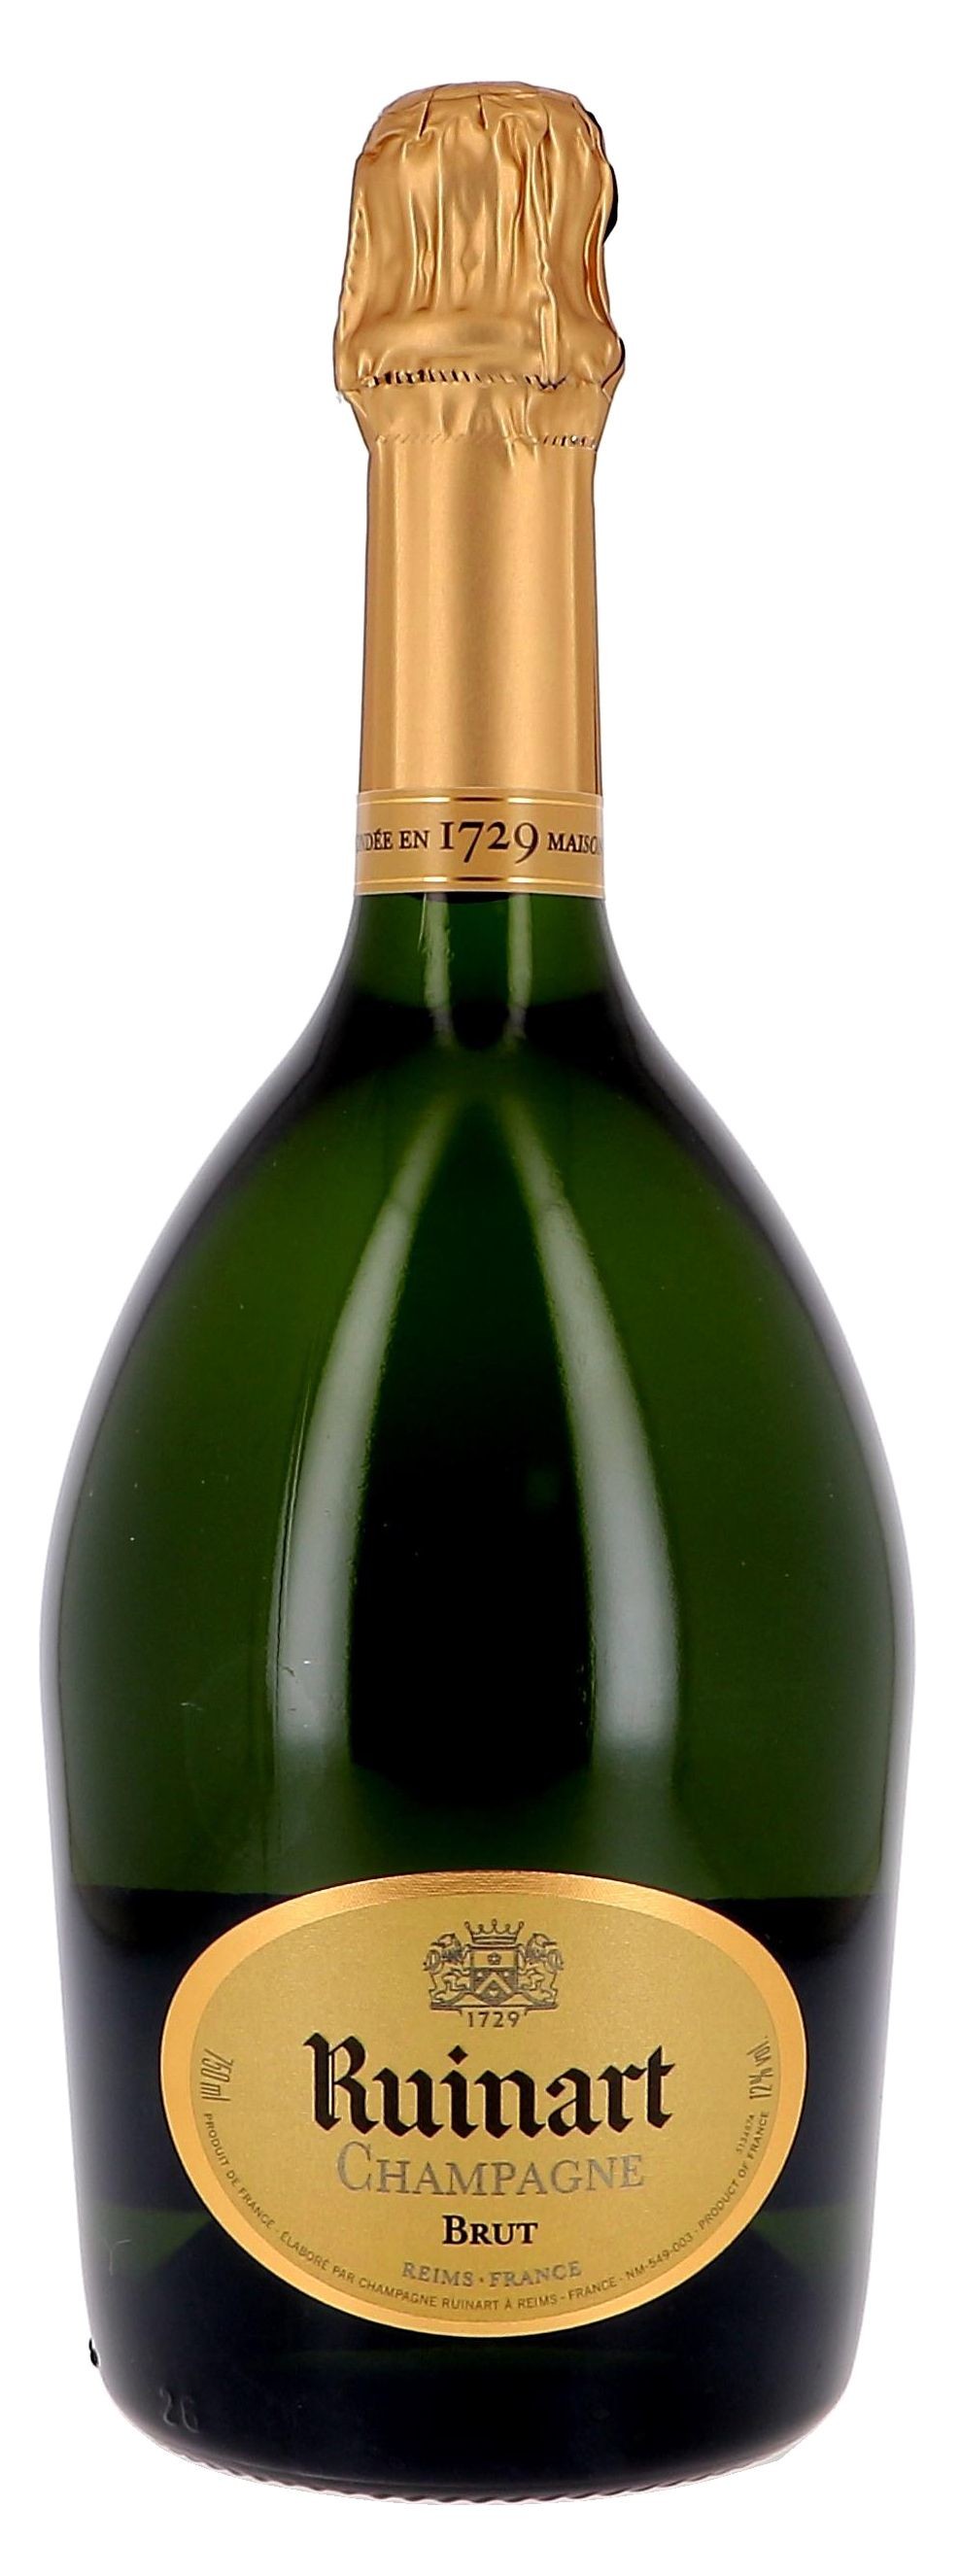 Champagne R de Ruinart 75cl Brut + Gechenkdoos (Champagne)